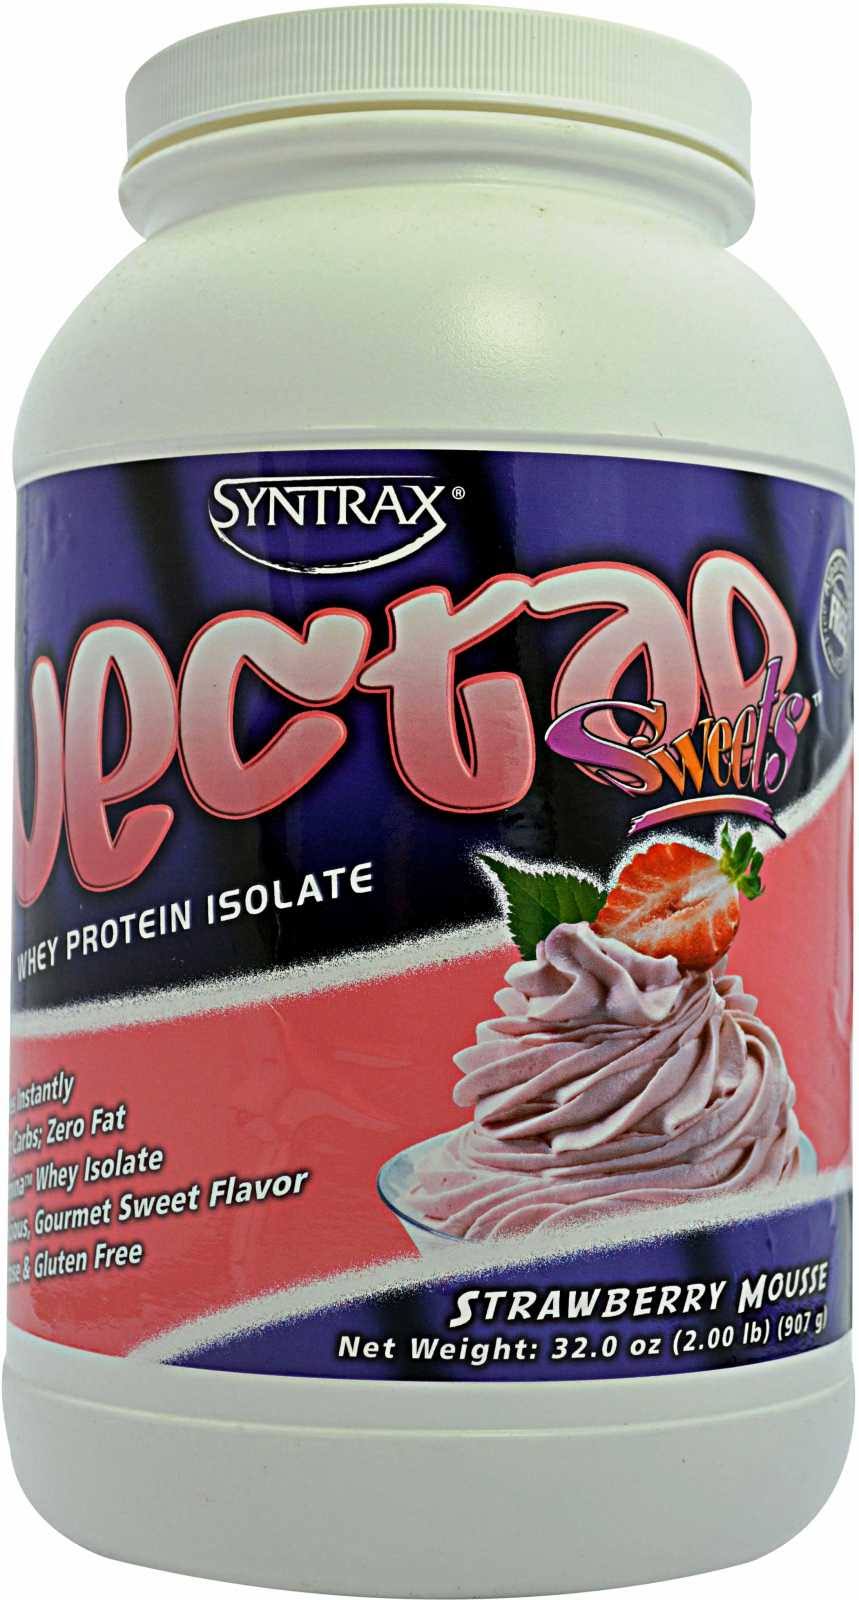 Syntrax Nectar Whey Protein Isolate Supplement Powder - Roadside Lemonade, 2lbs